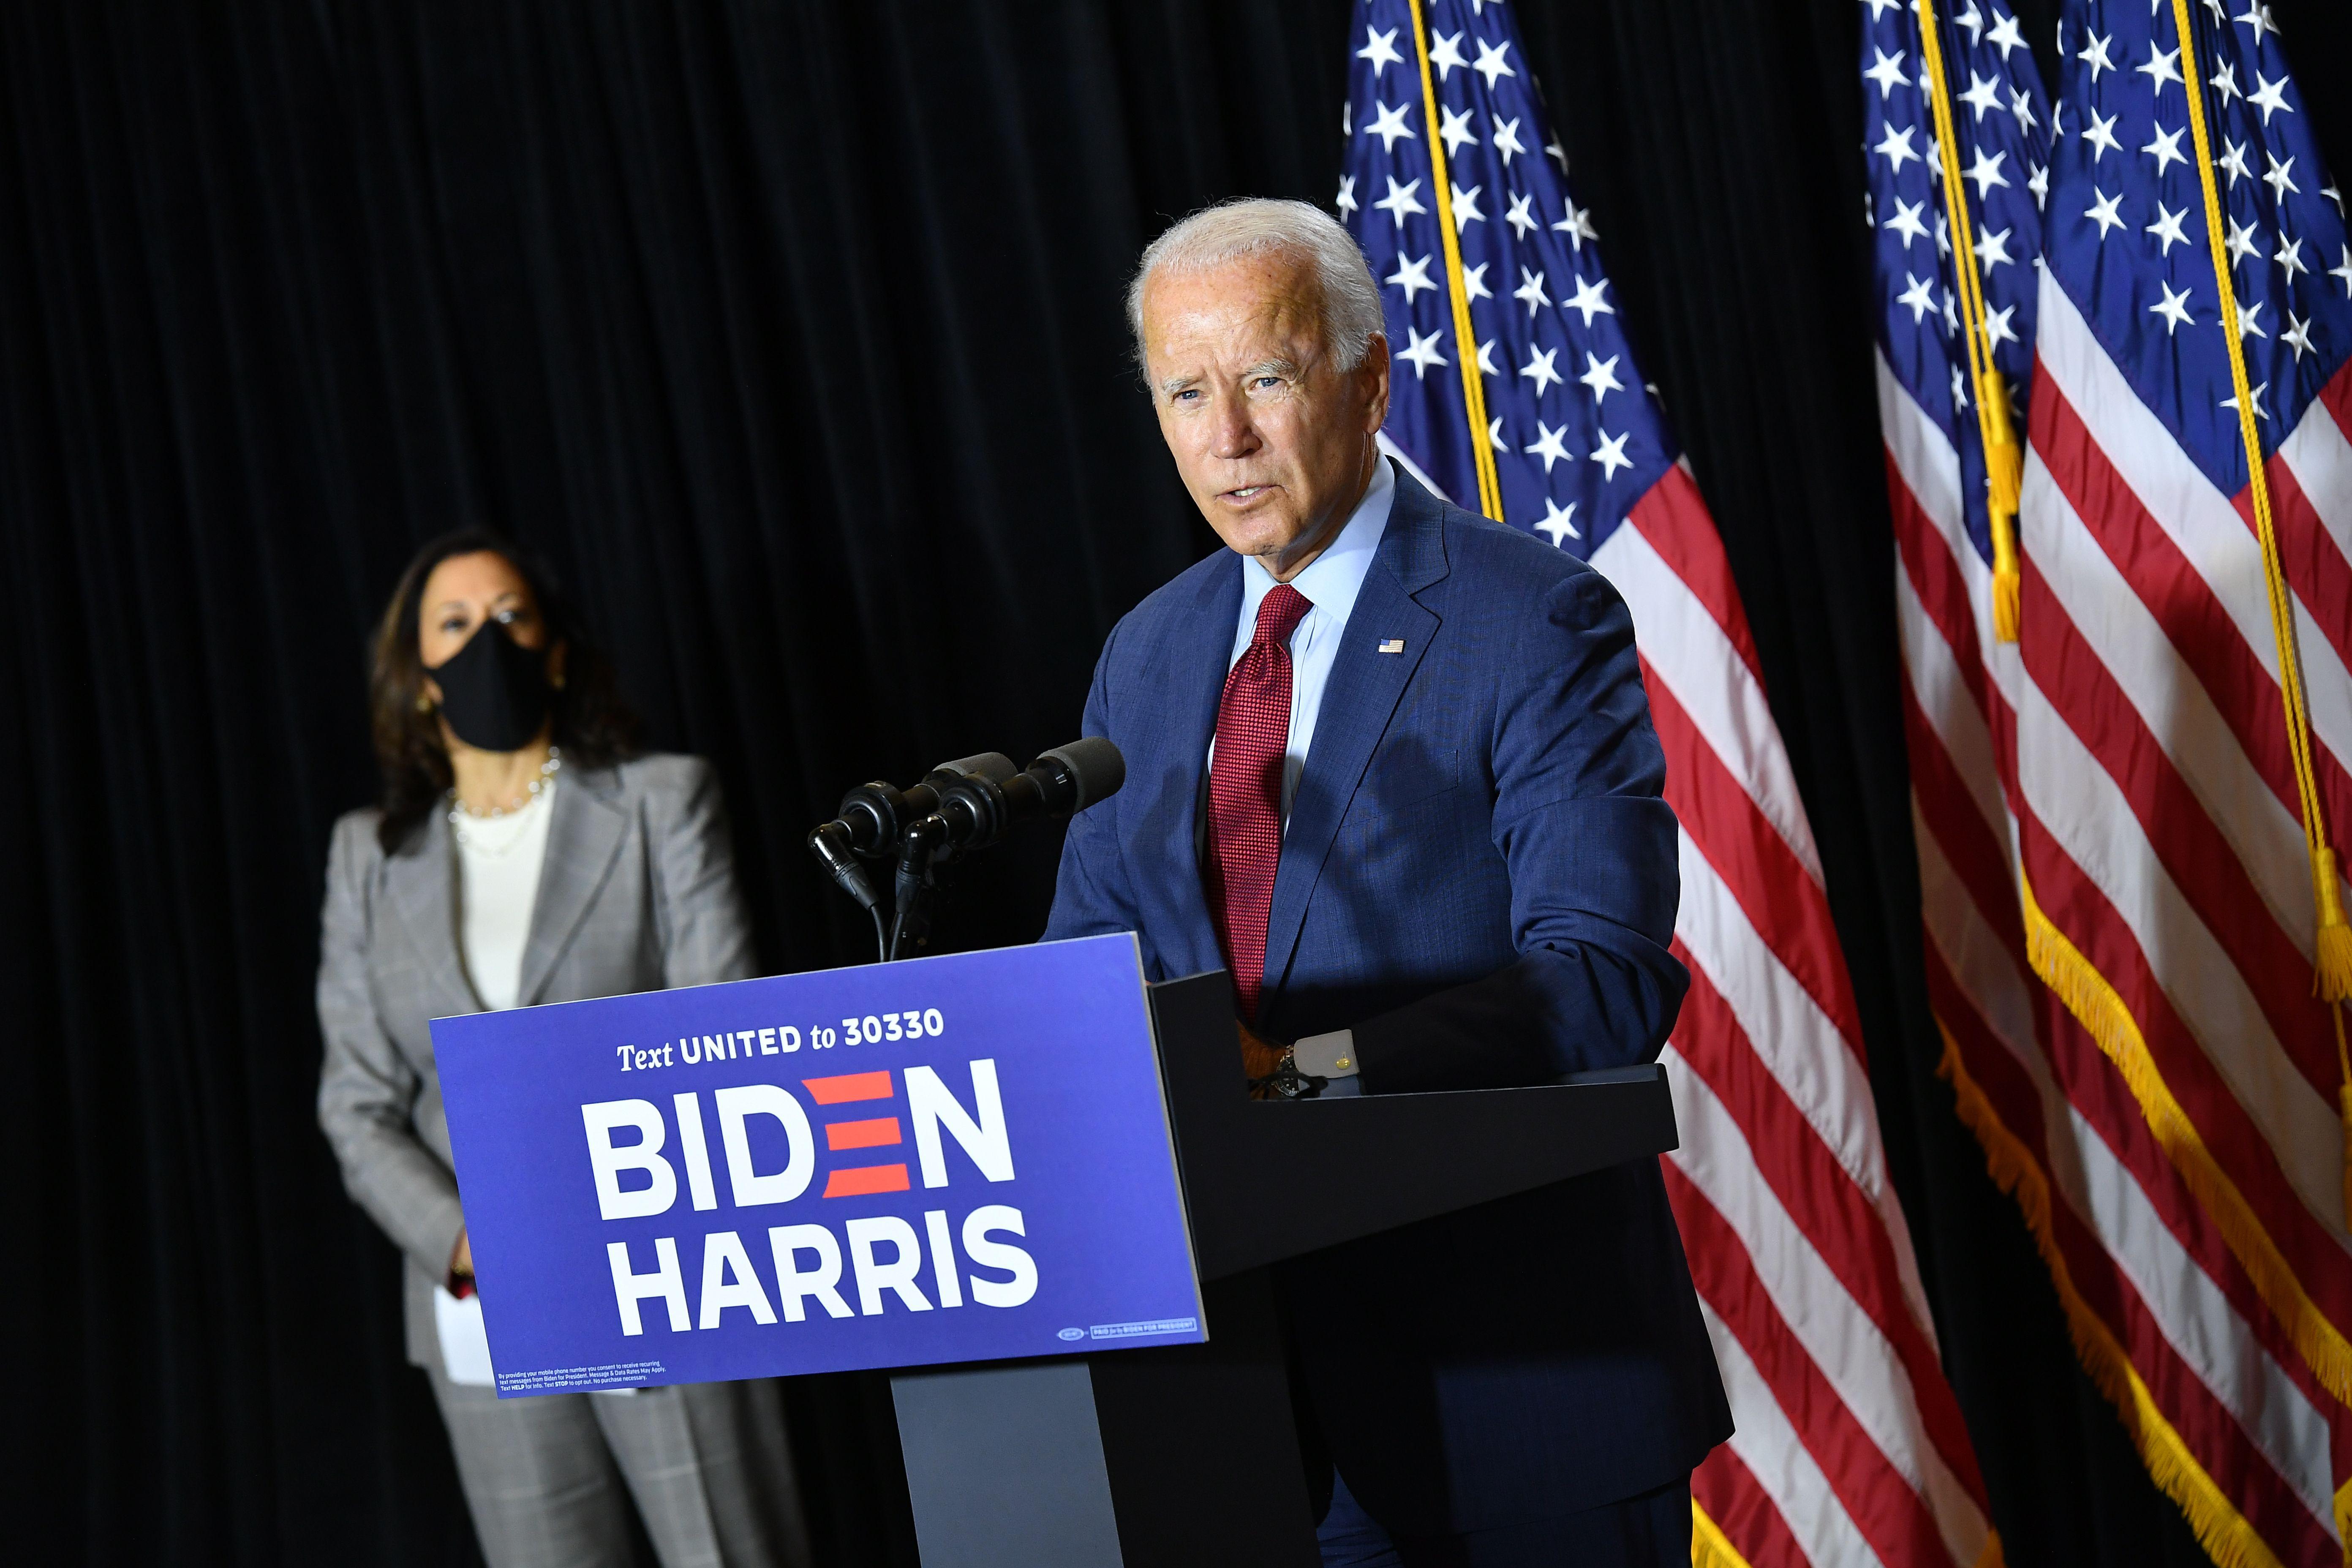 Joe Biden speaks at a podium, Harris standing beside him